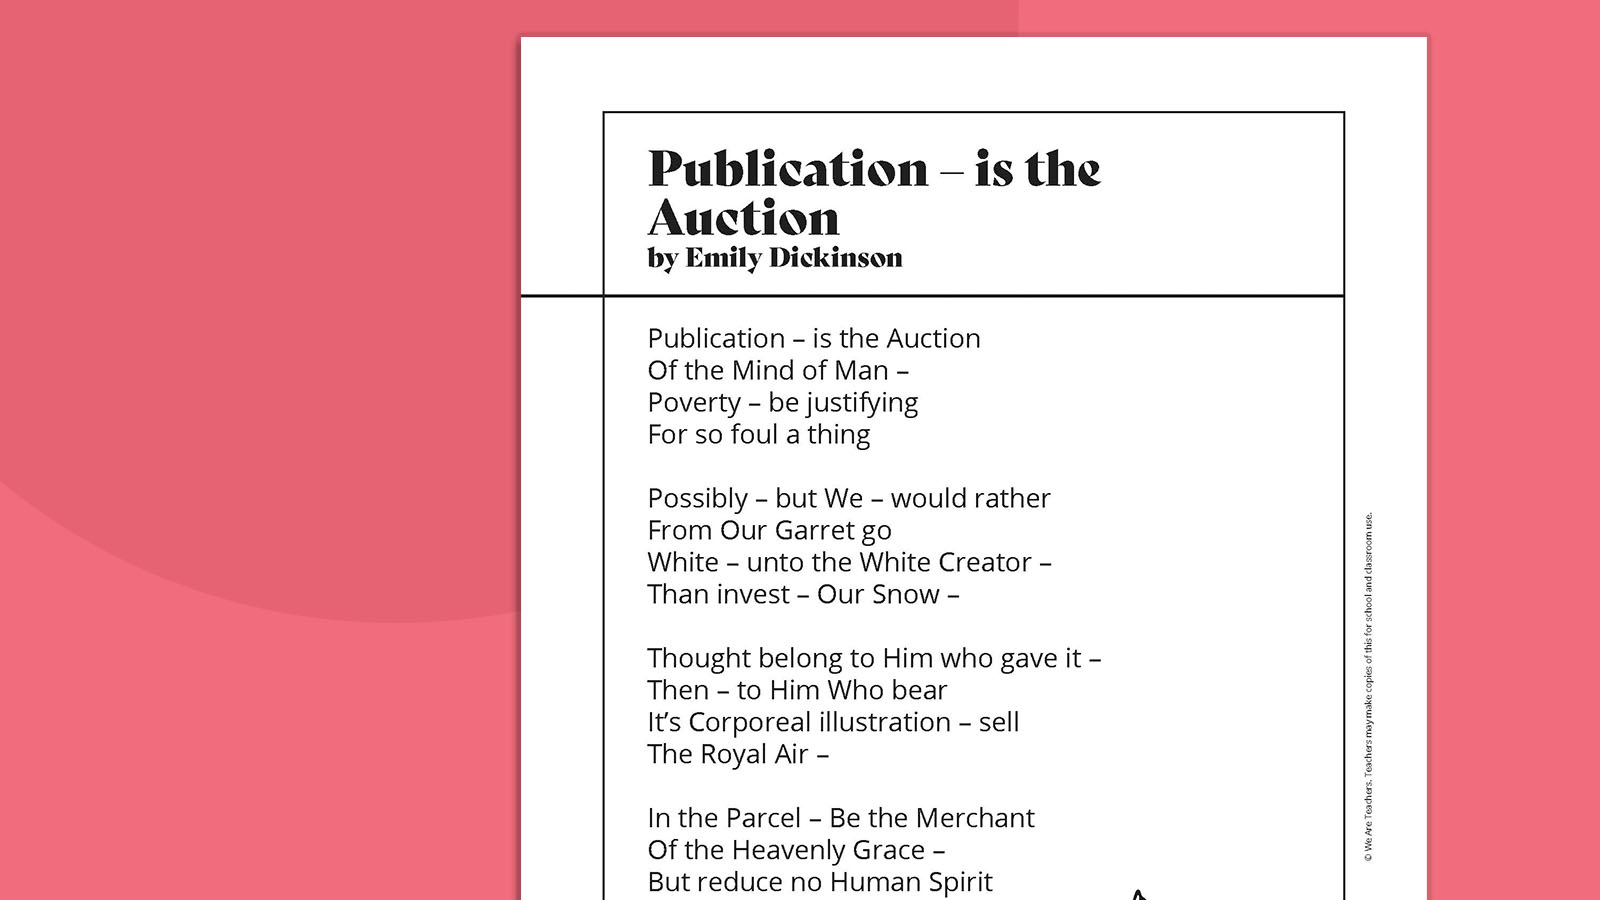 Publication—is the Auction